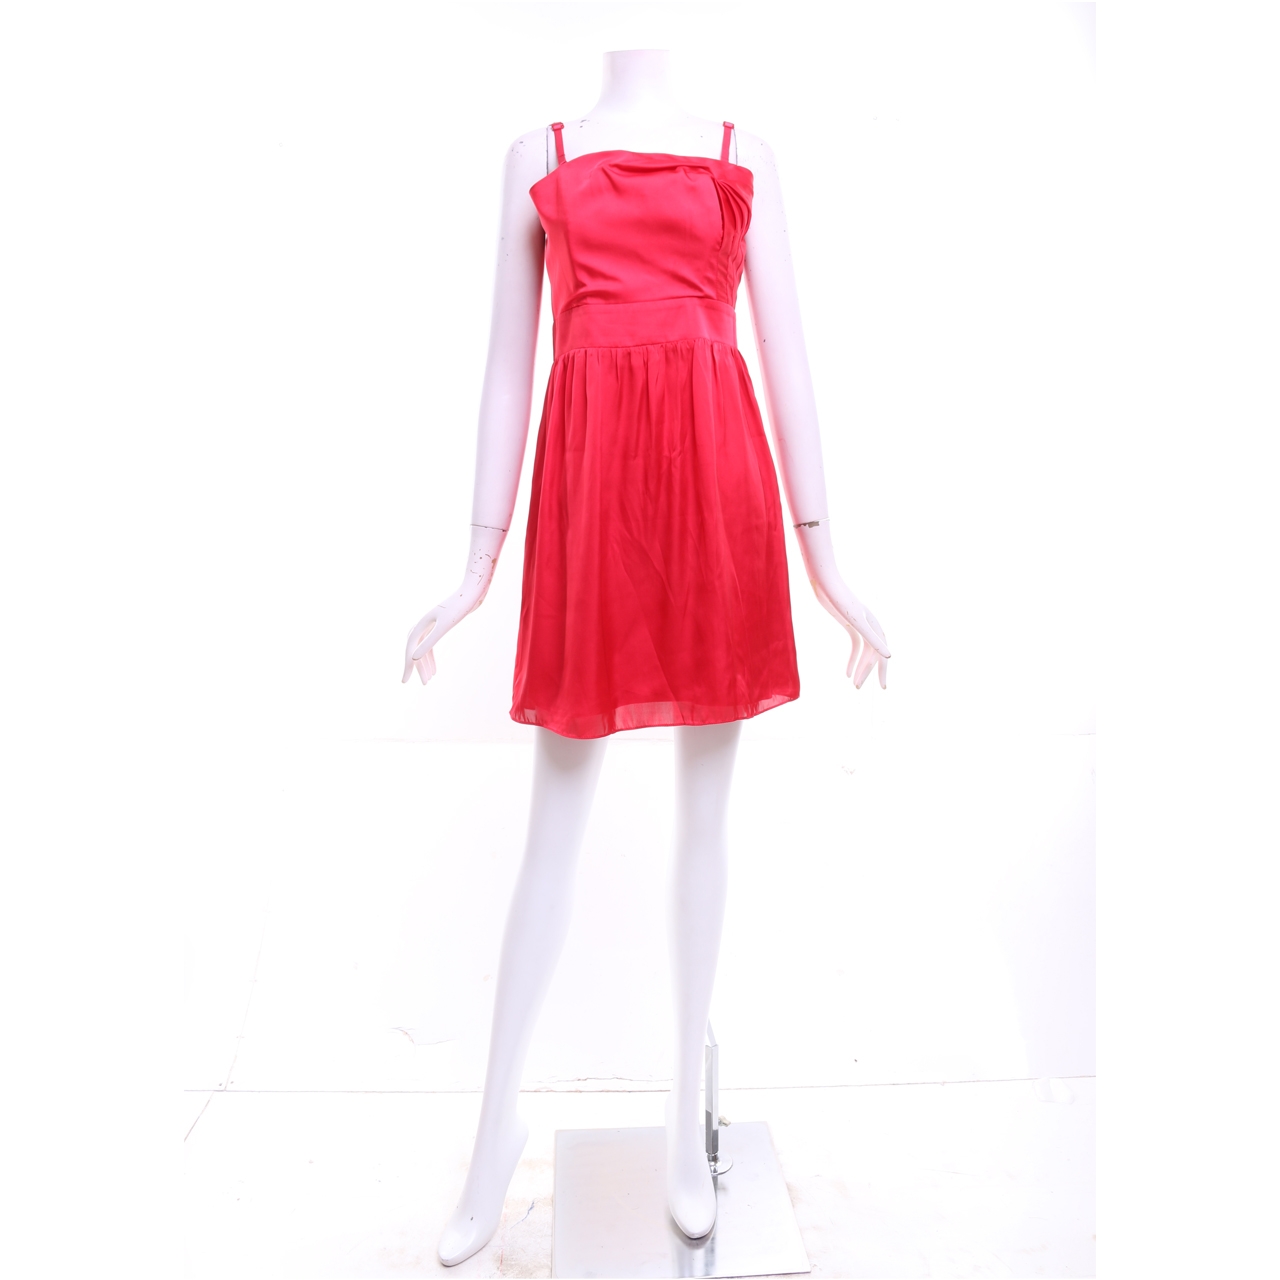 Cooper ST Cherry Red Tube Mini Dress